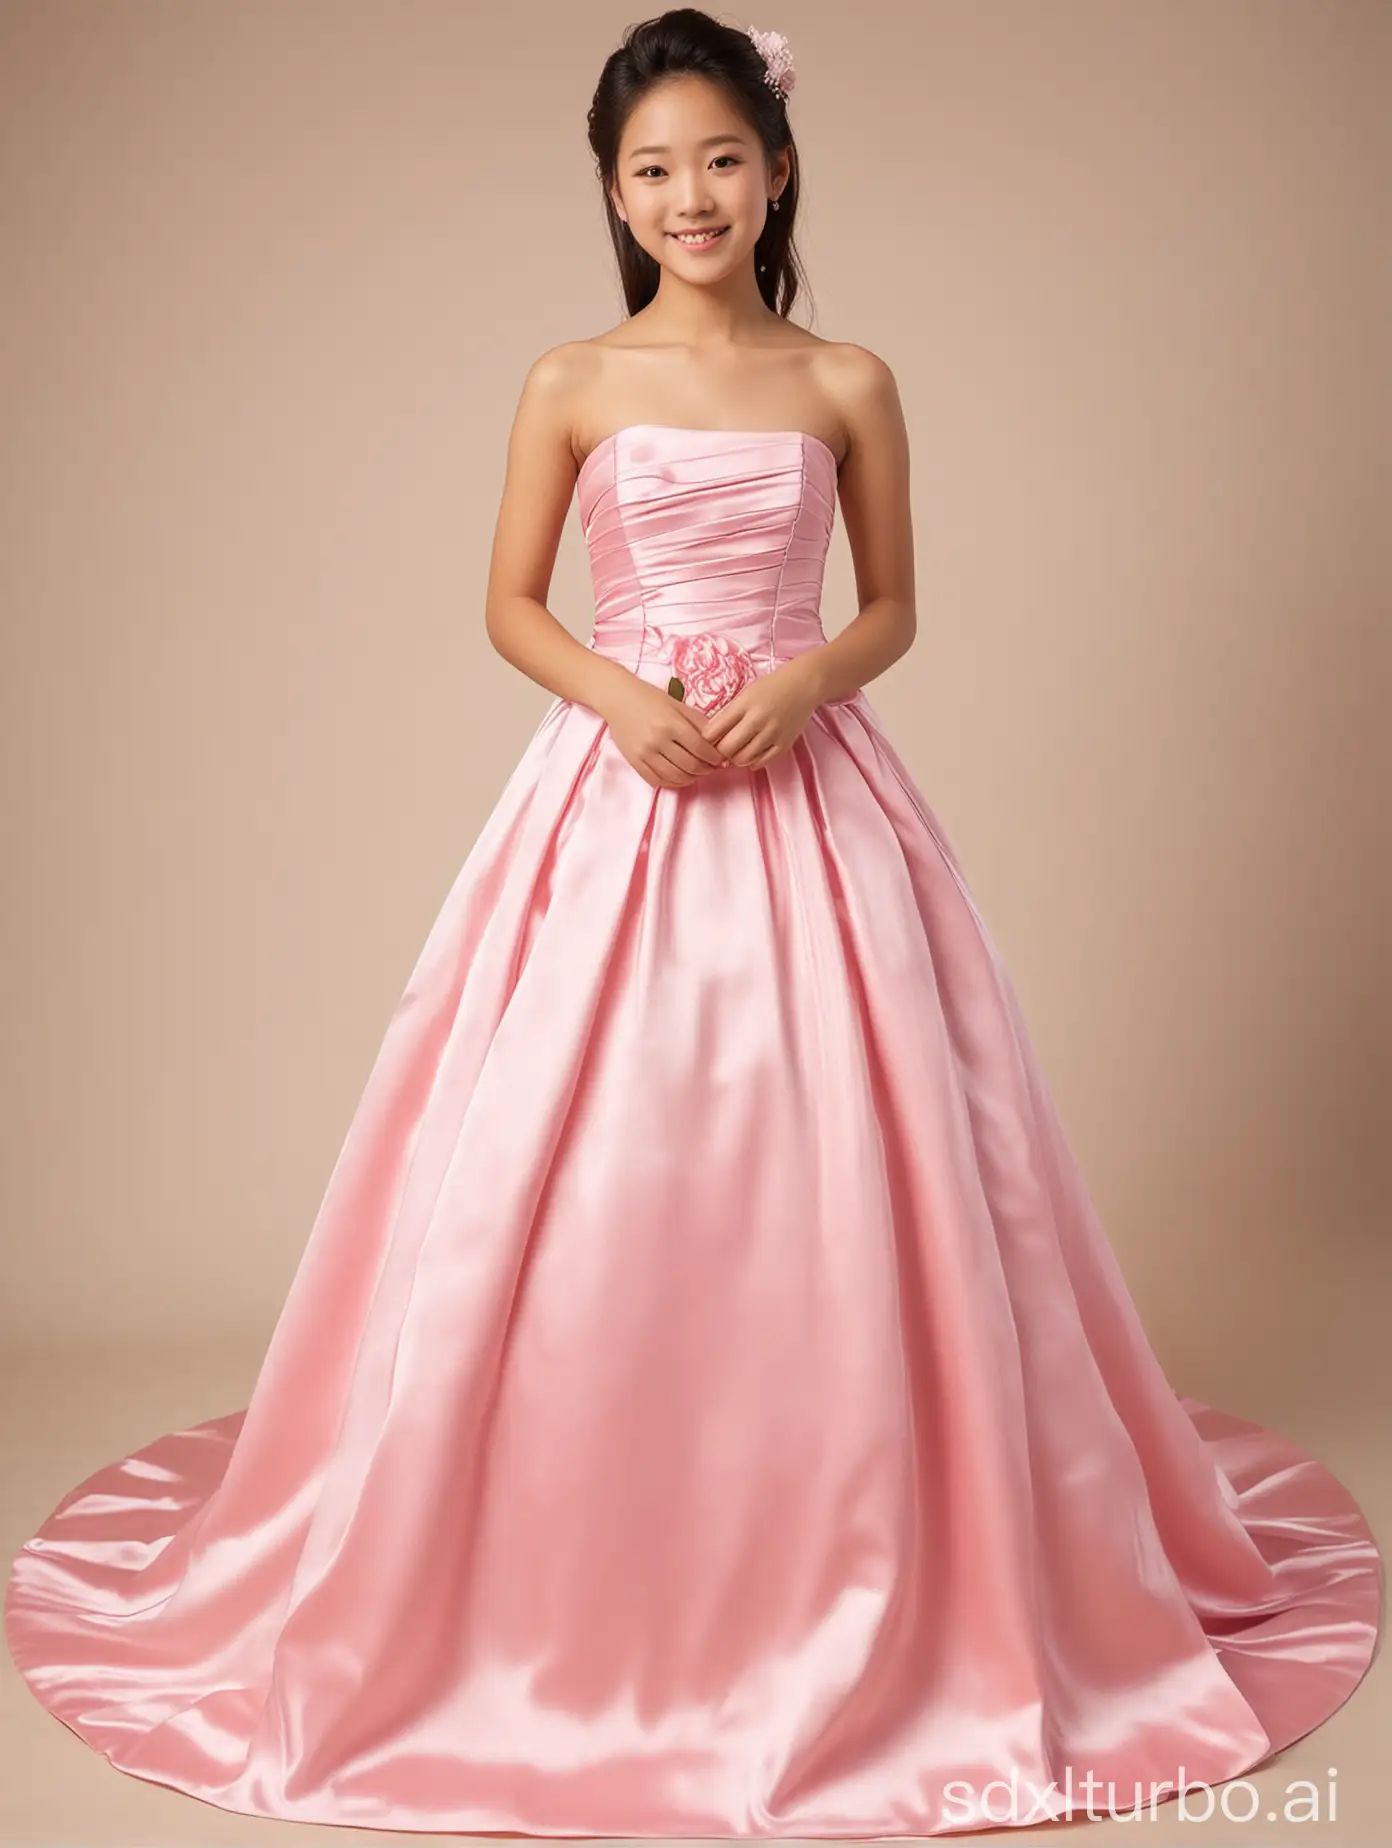 Japanese-Girl-in-Pink-Strapless-Wedding-Dress-12YearOlds-Elegant-Attire